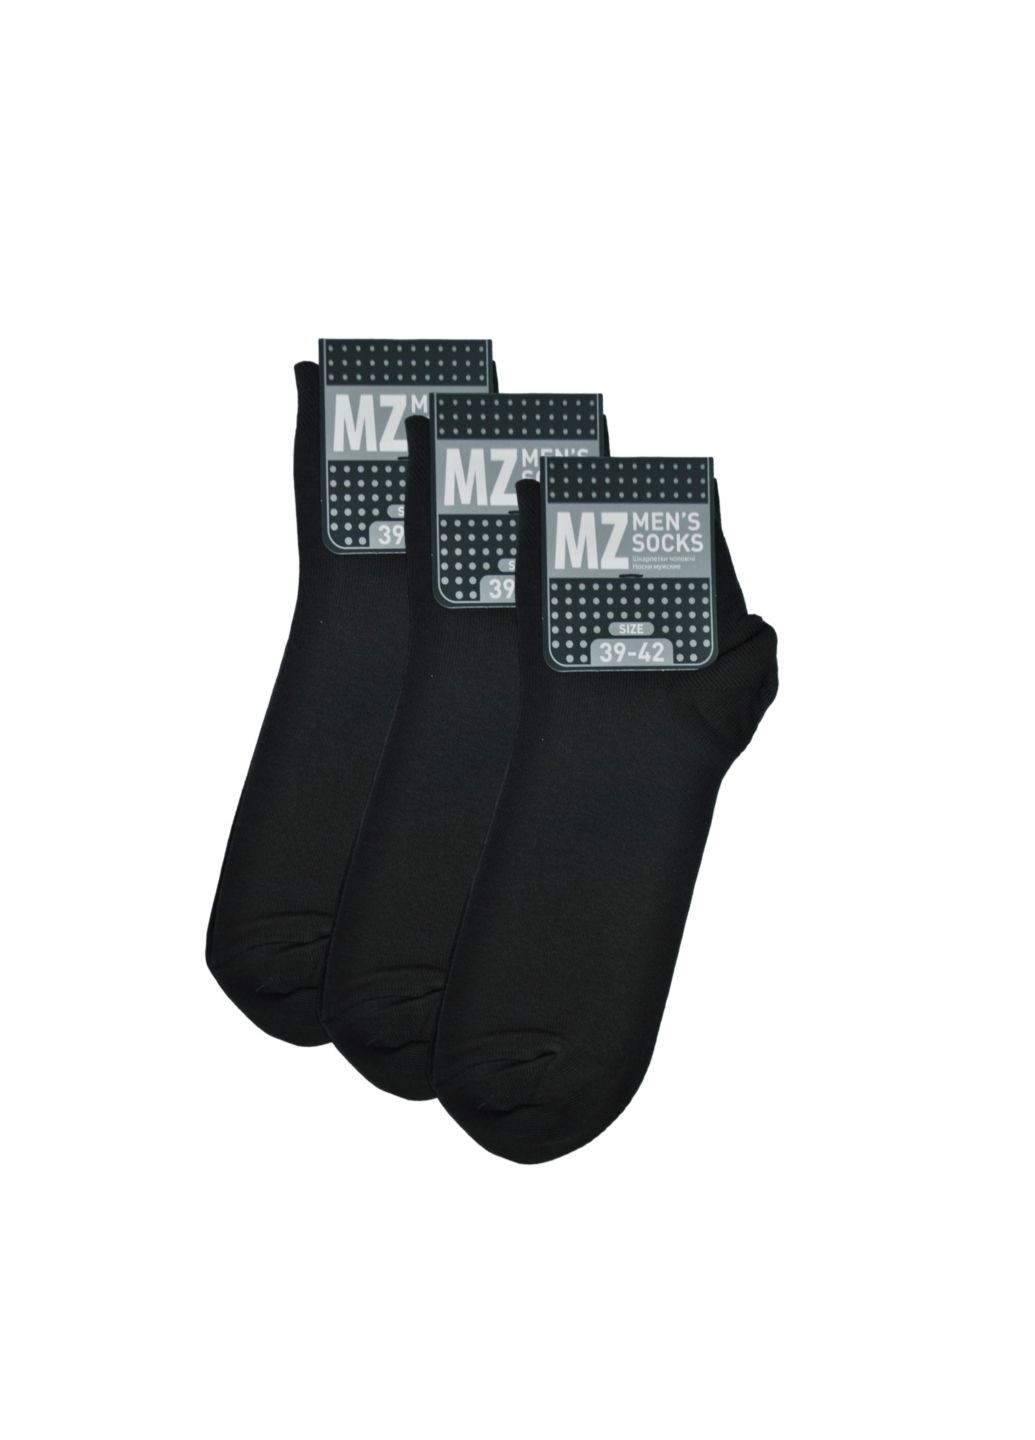 NTF Шкарпетки чол. (короткі) MS2C/Sl-cl, р.39-42, black. Набір (3 шт.) MZ ms2c_sl-cl (259038693)